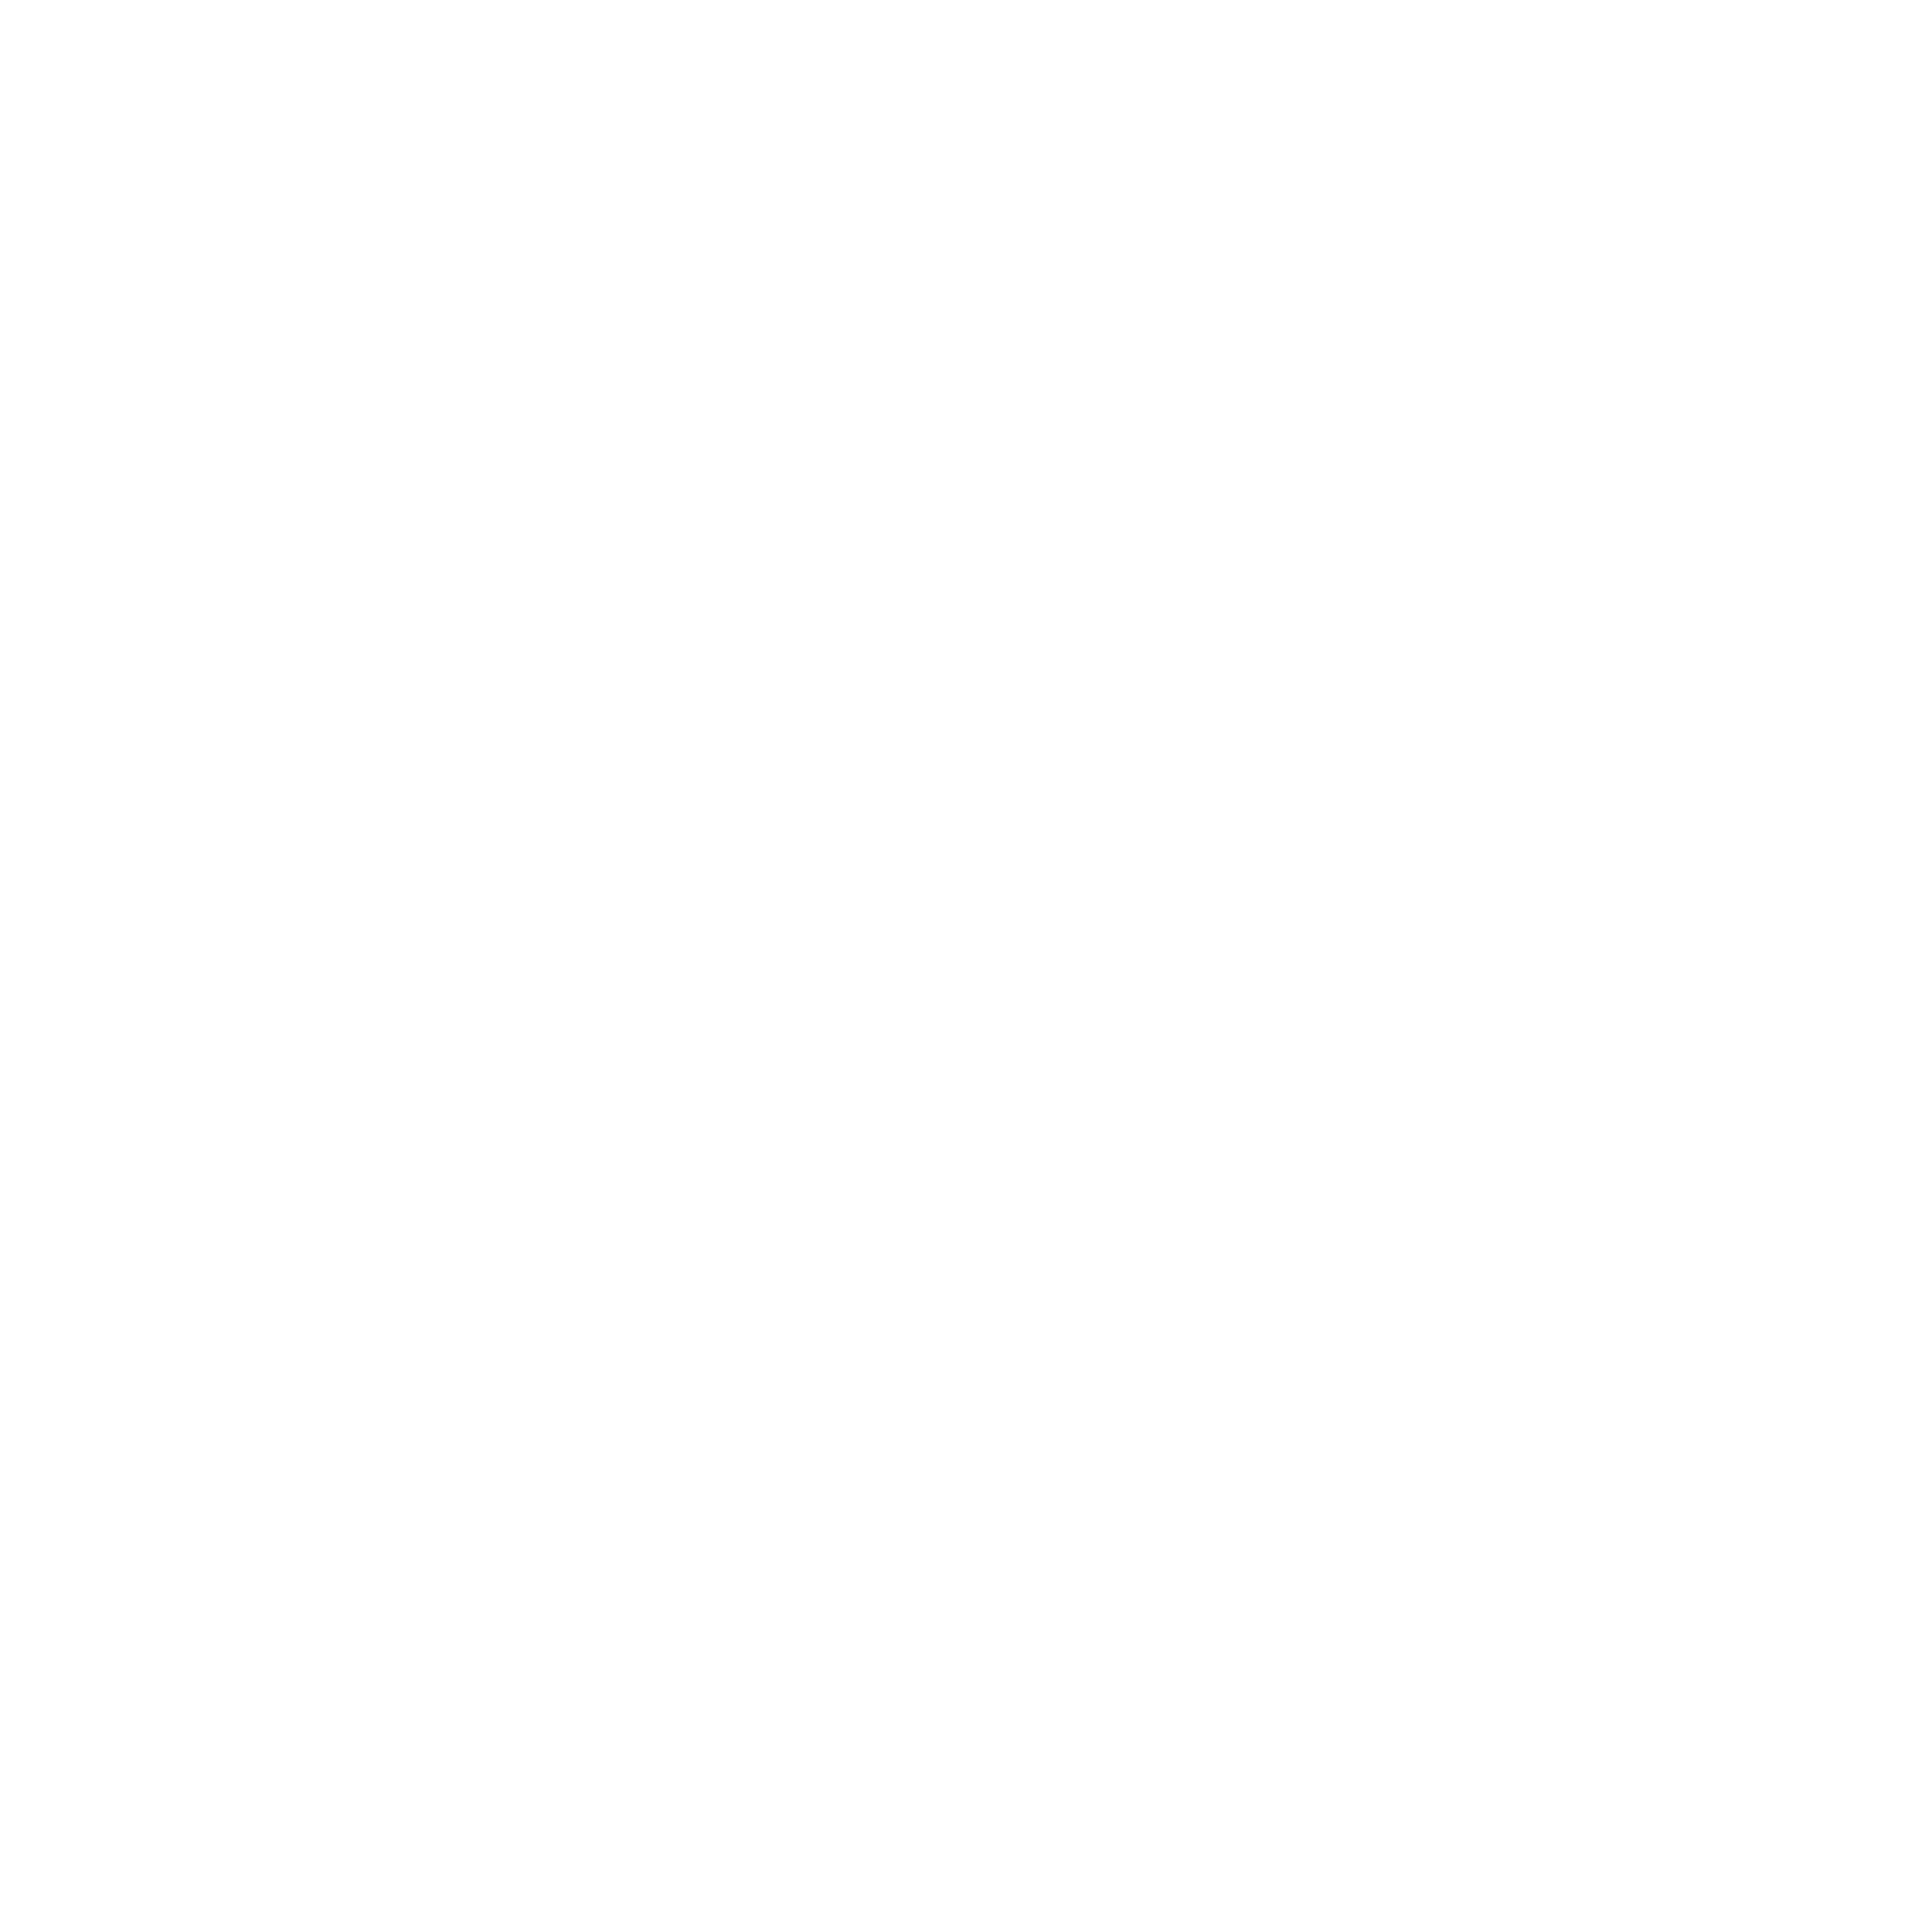 roaster Caffe Vita's logo